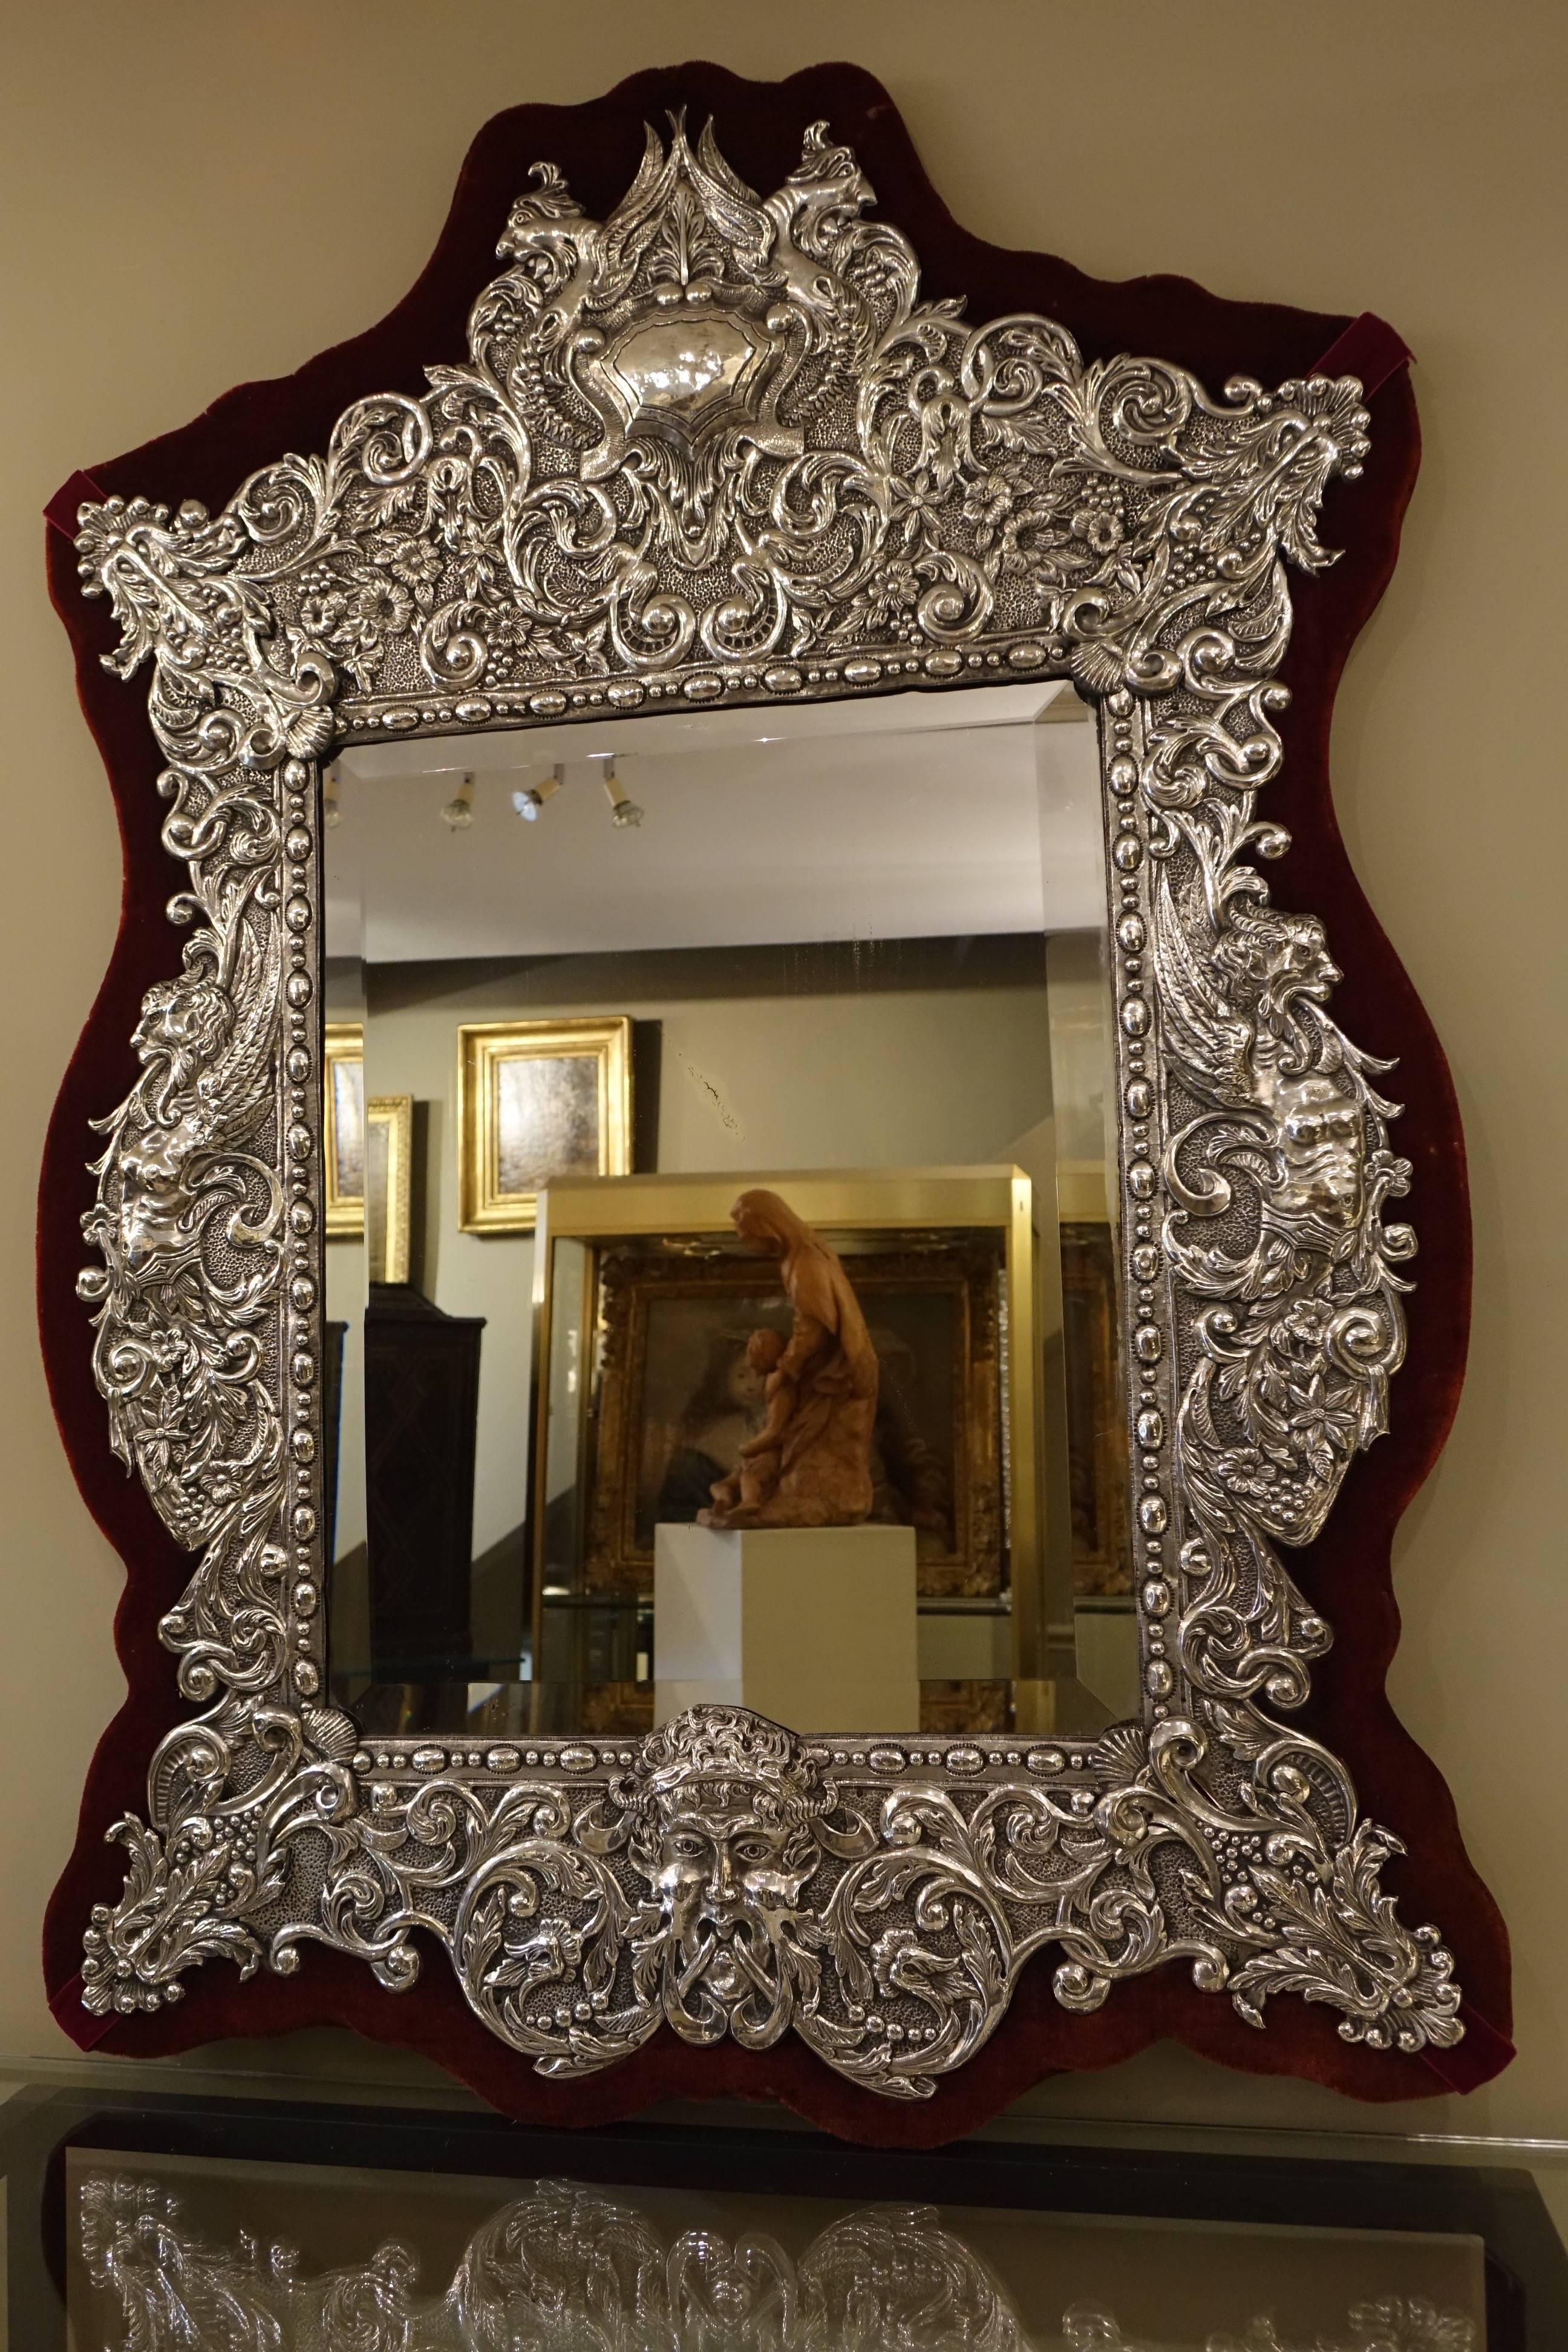 Neo renaissance 19th century silver plated mirror, France
Original mercury glass mirror, Original velvet fabric.